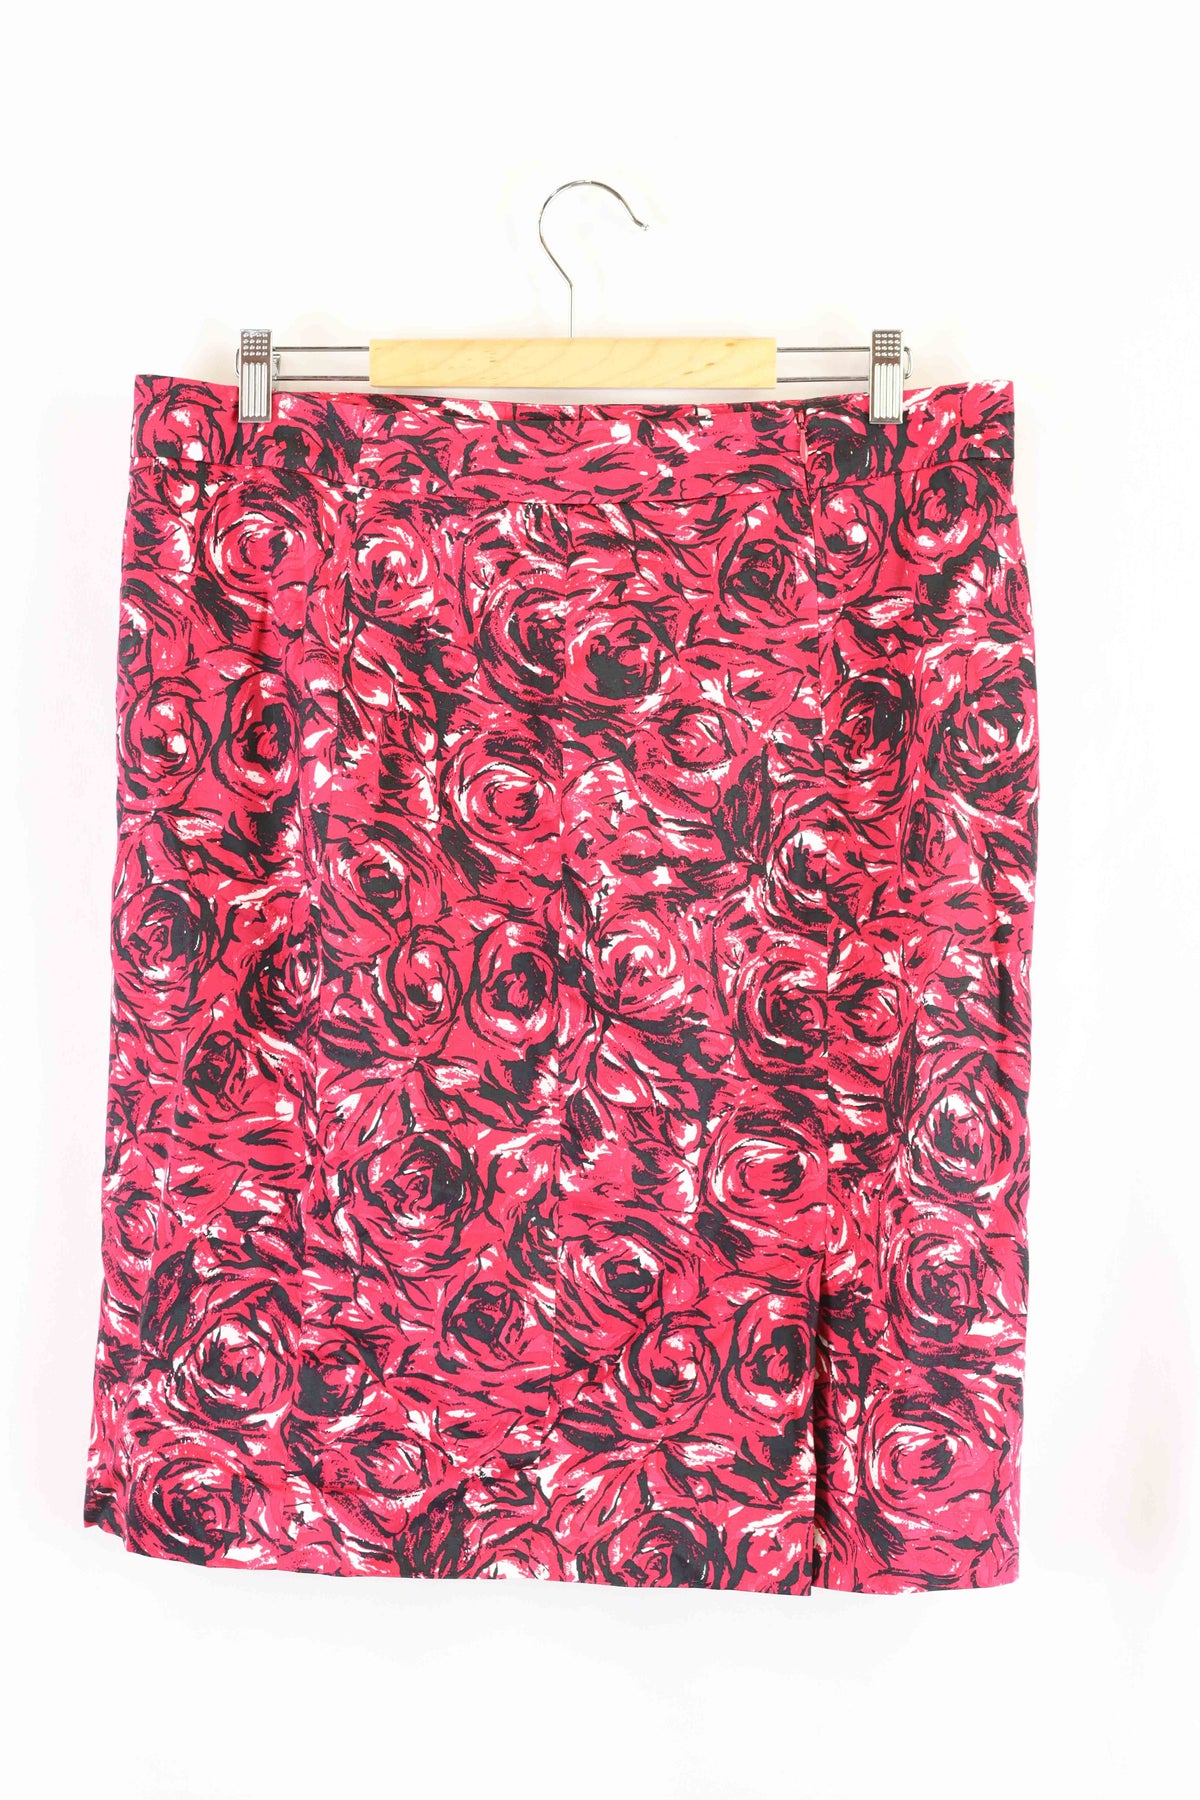 David Lawrence Red Floral Skirt 16